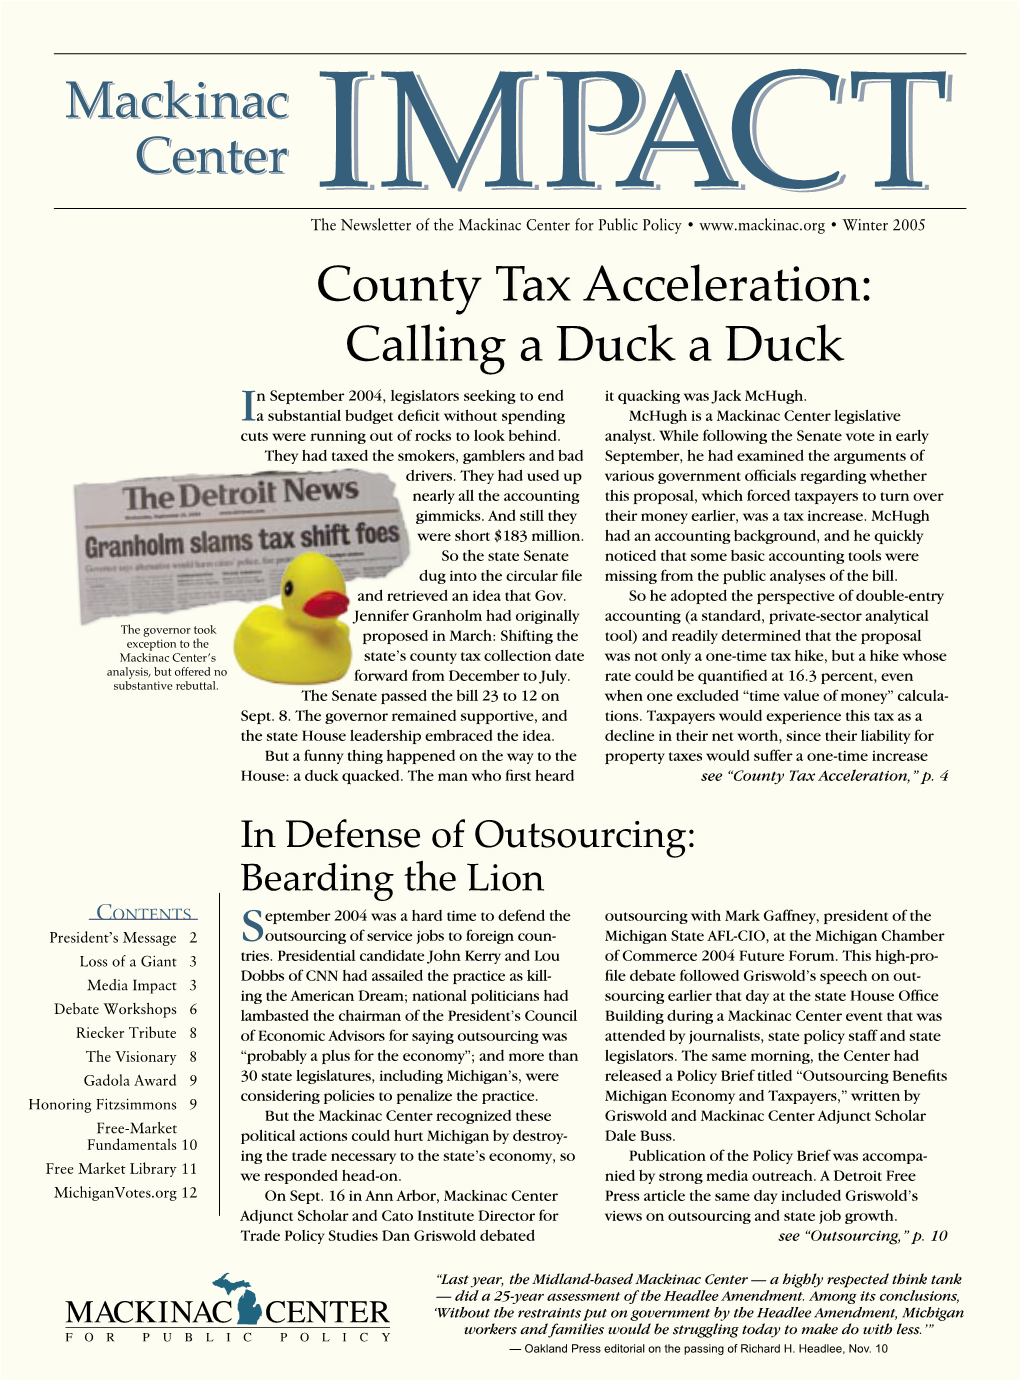 County Tax Acceleration: Calling a Duck a Duck N September 2004, Legislators Seeking to End It Quacking Was Jack Mchugh